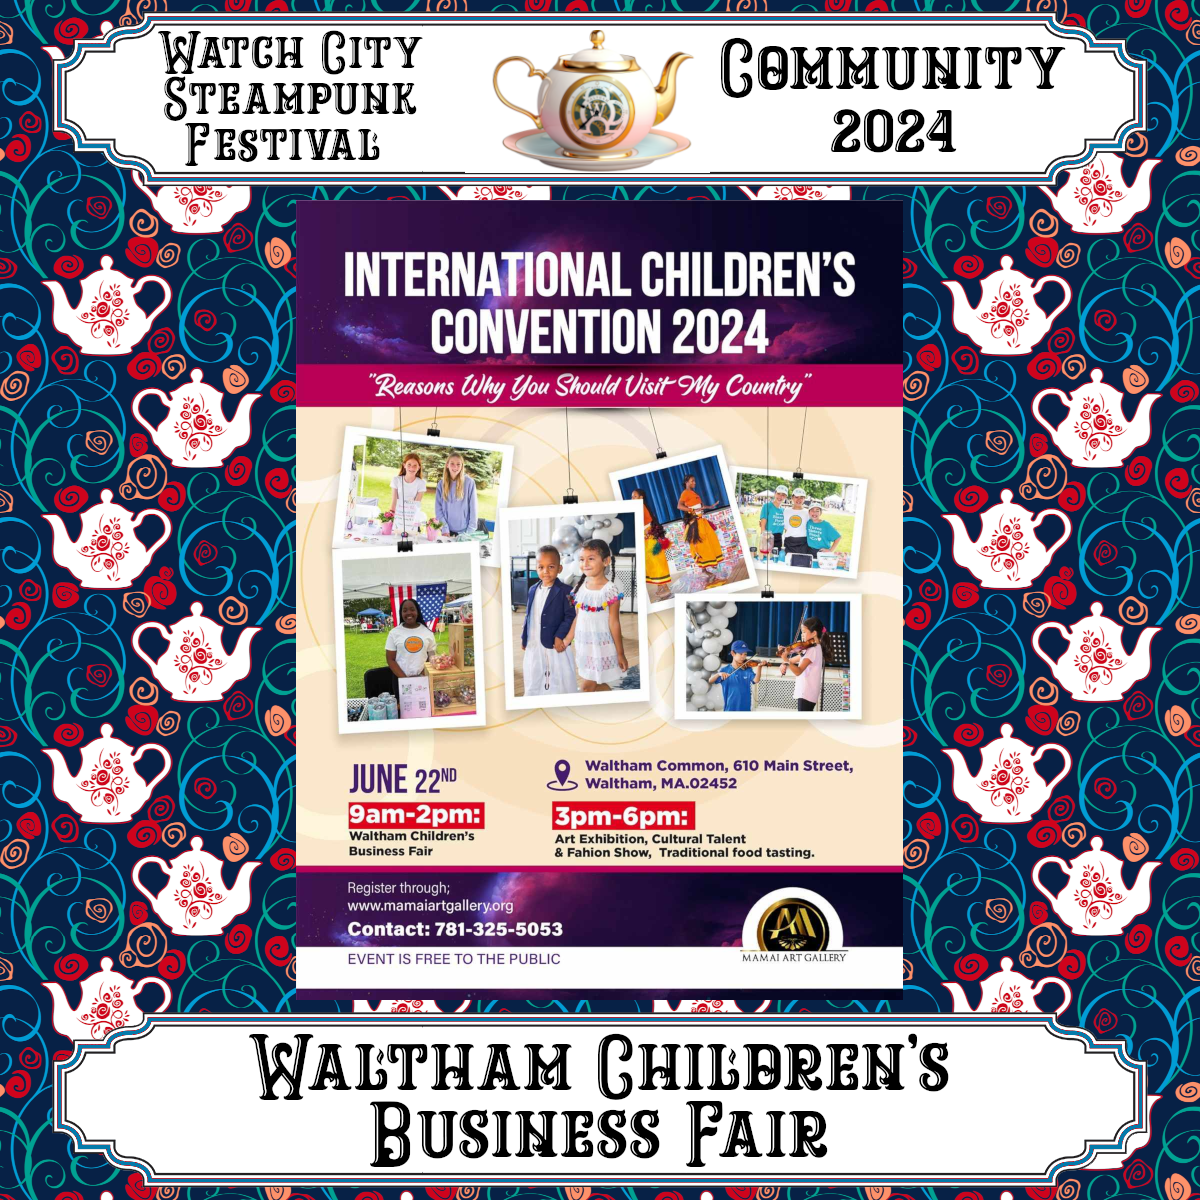 Waltham Children's Business Fair